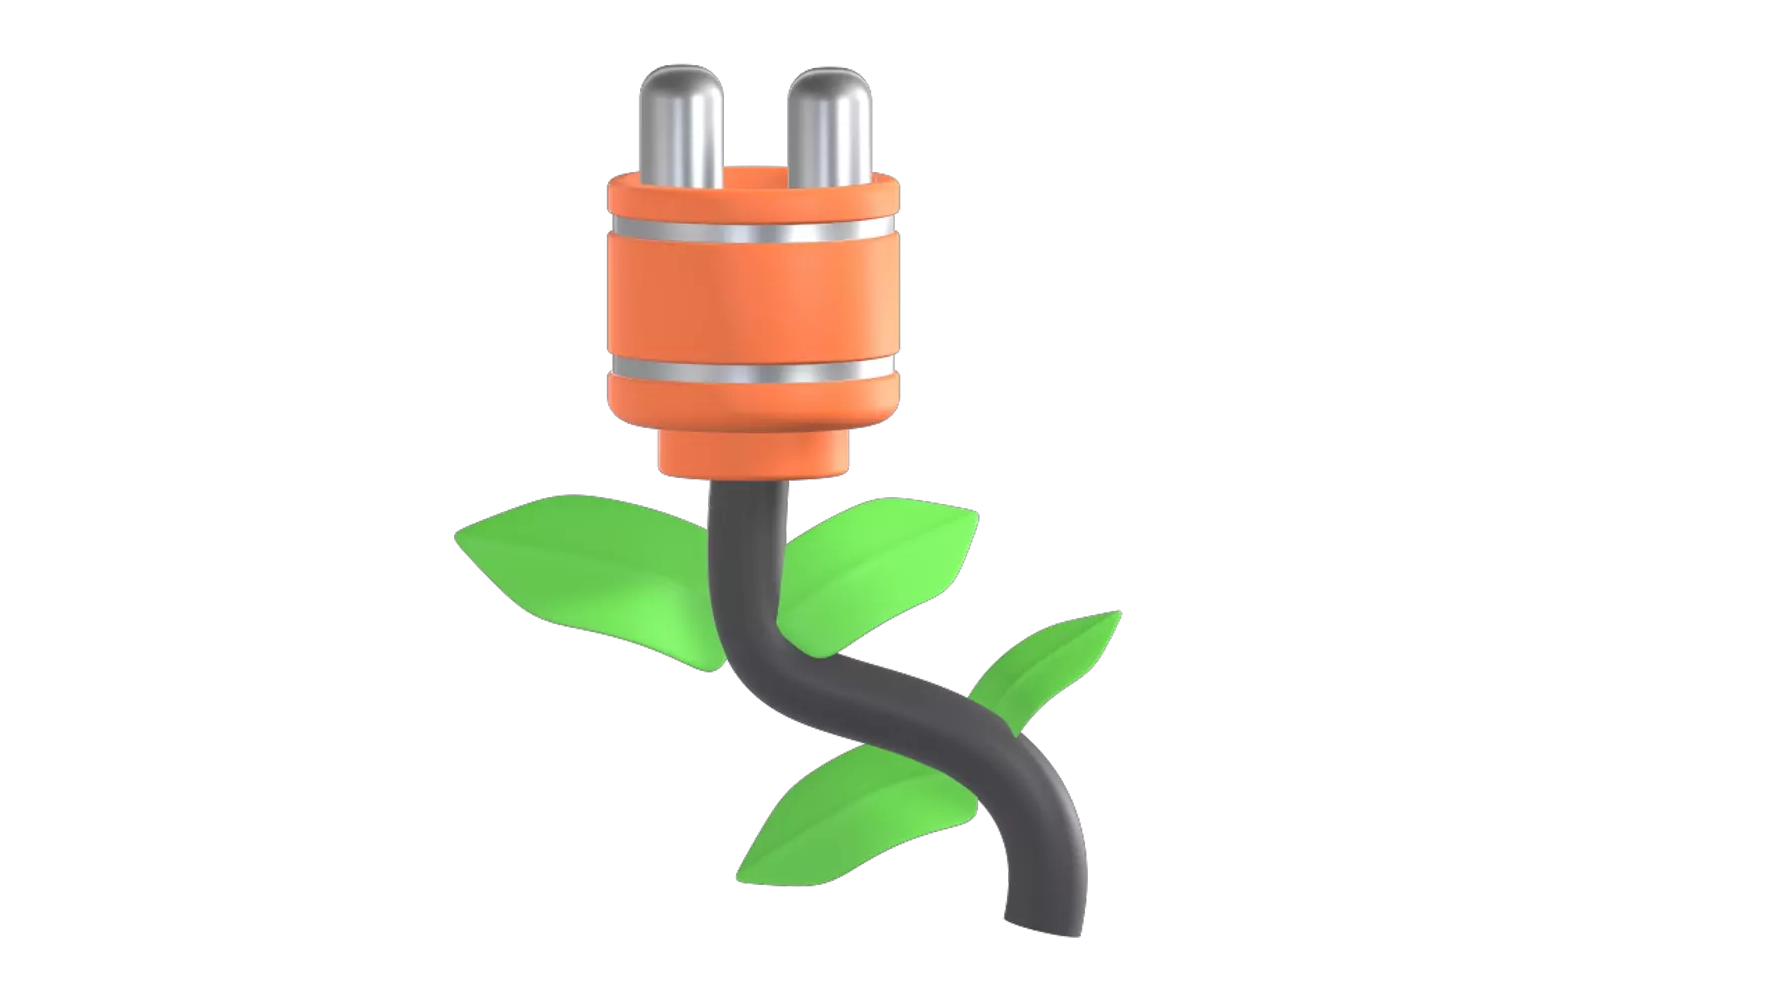 Eco Plug 3D Graphic